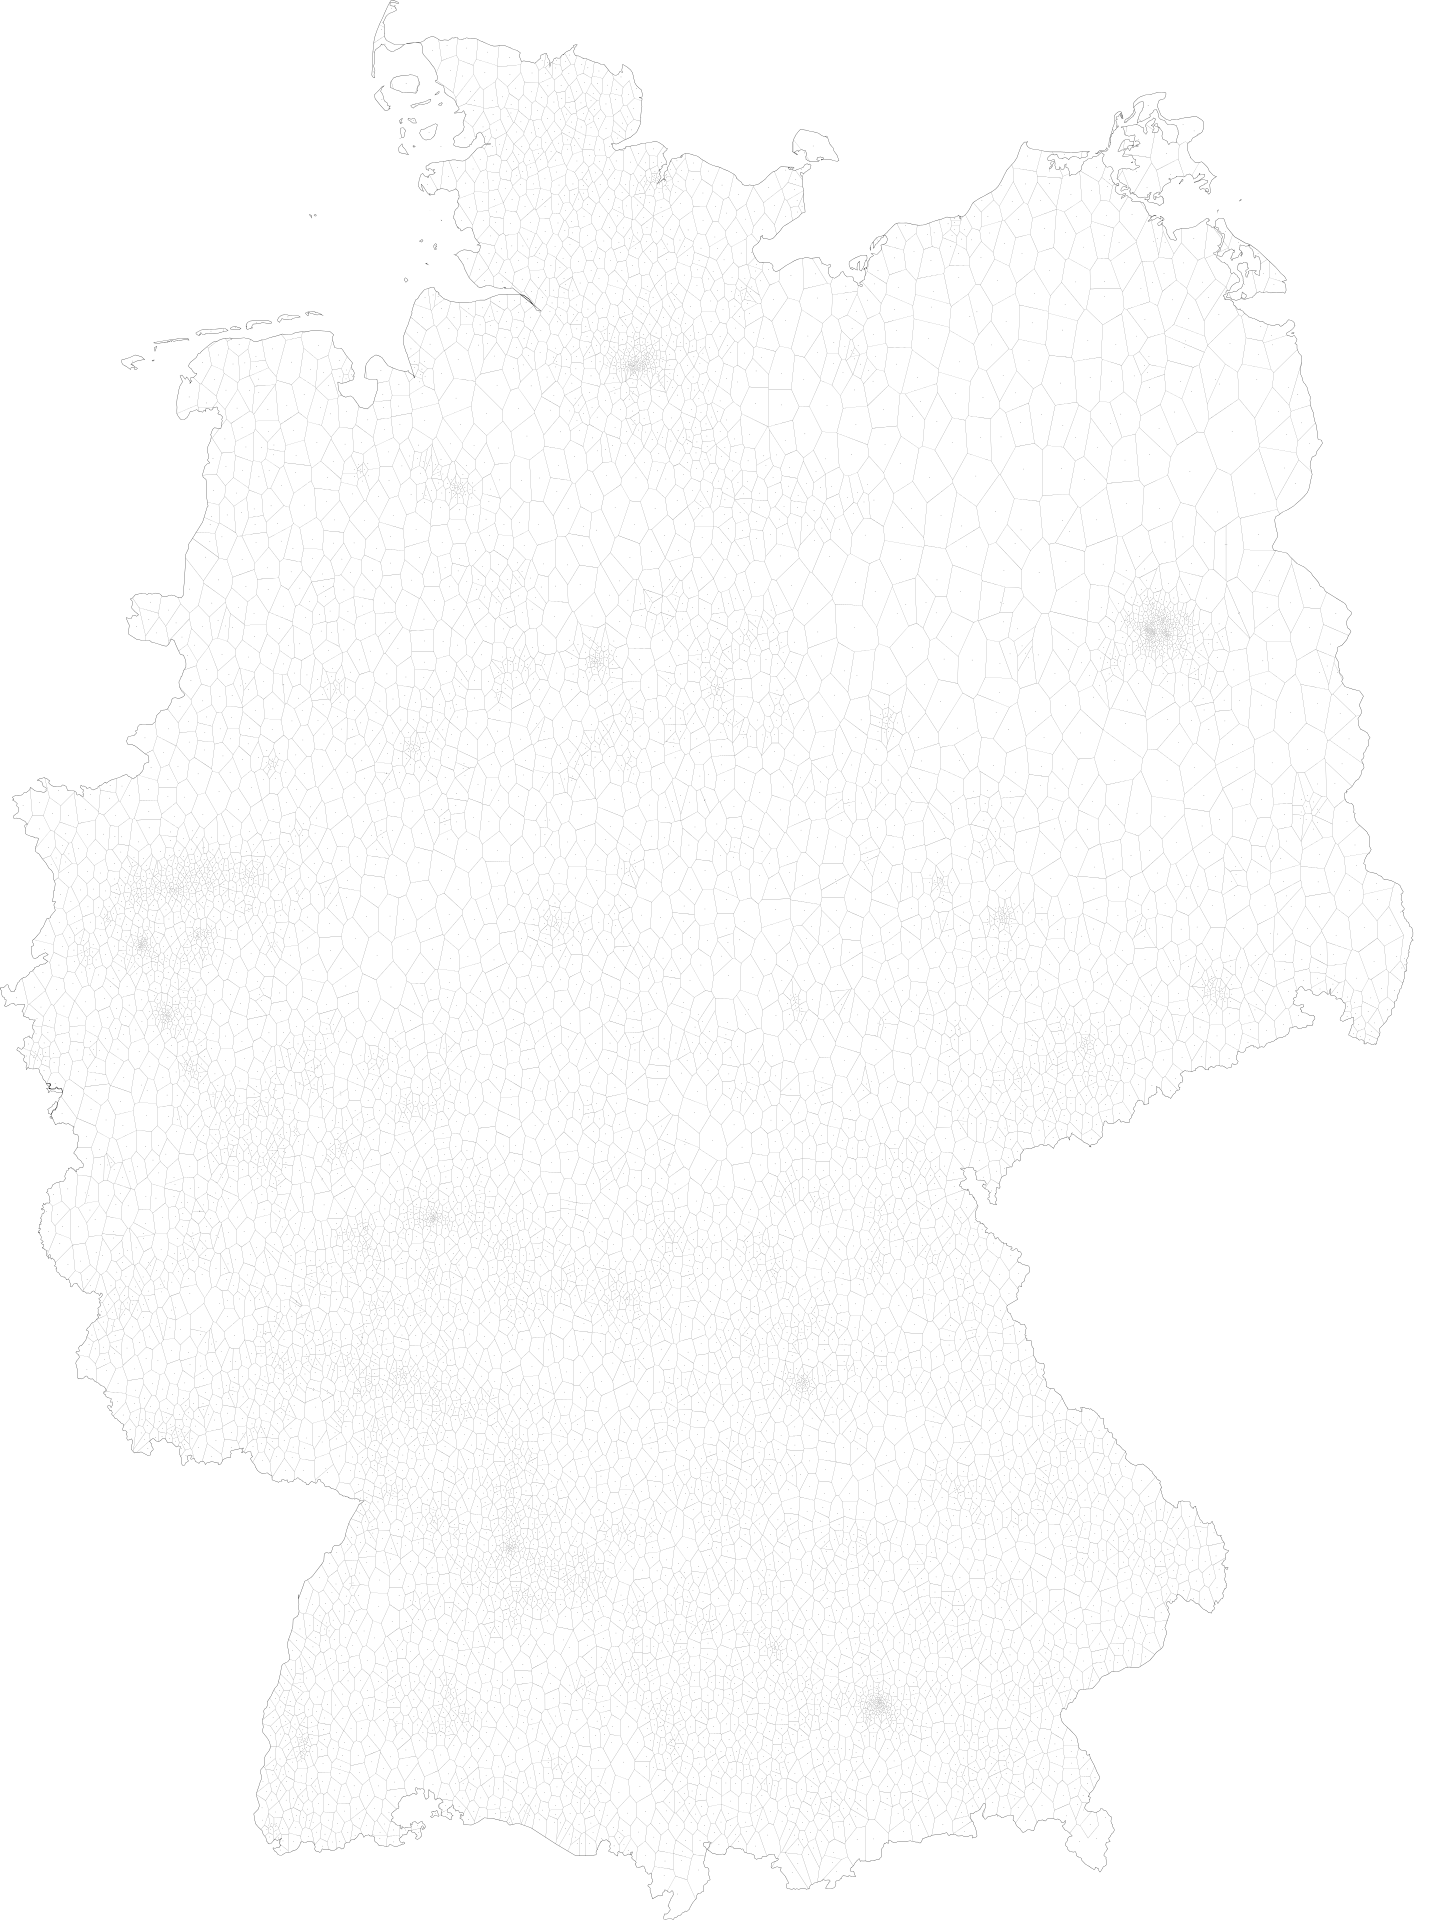 https://raw.github.com/mdornseif/pyGeoDb/master/maps/deutschland_gebiete.png